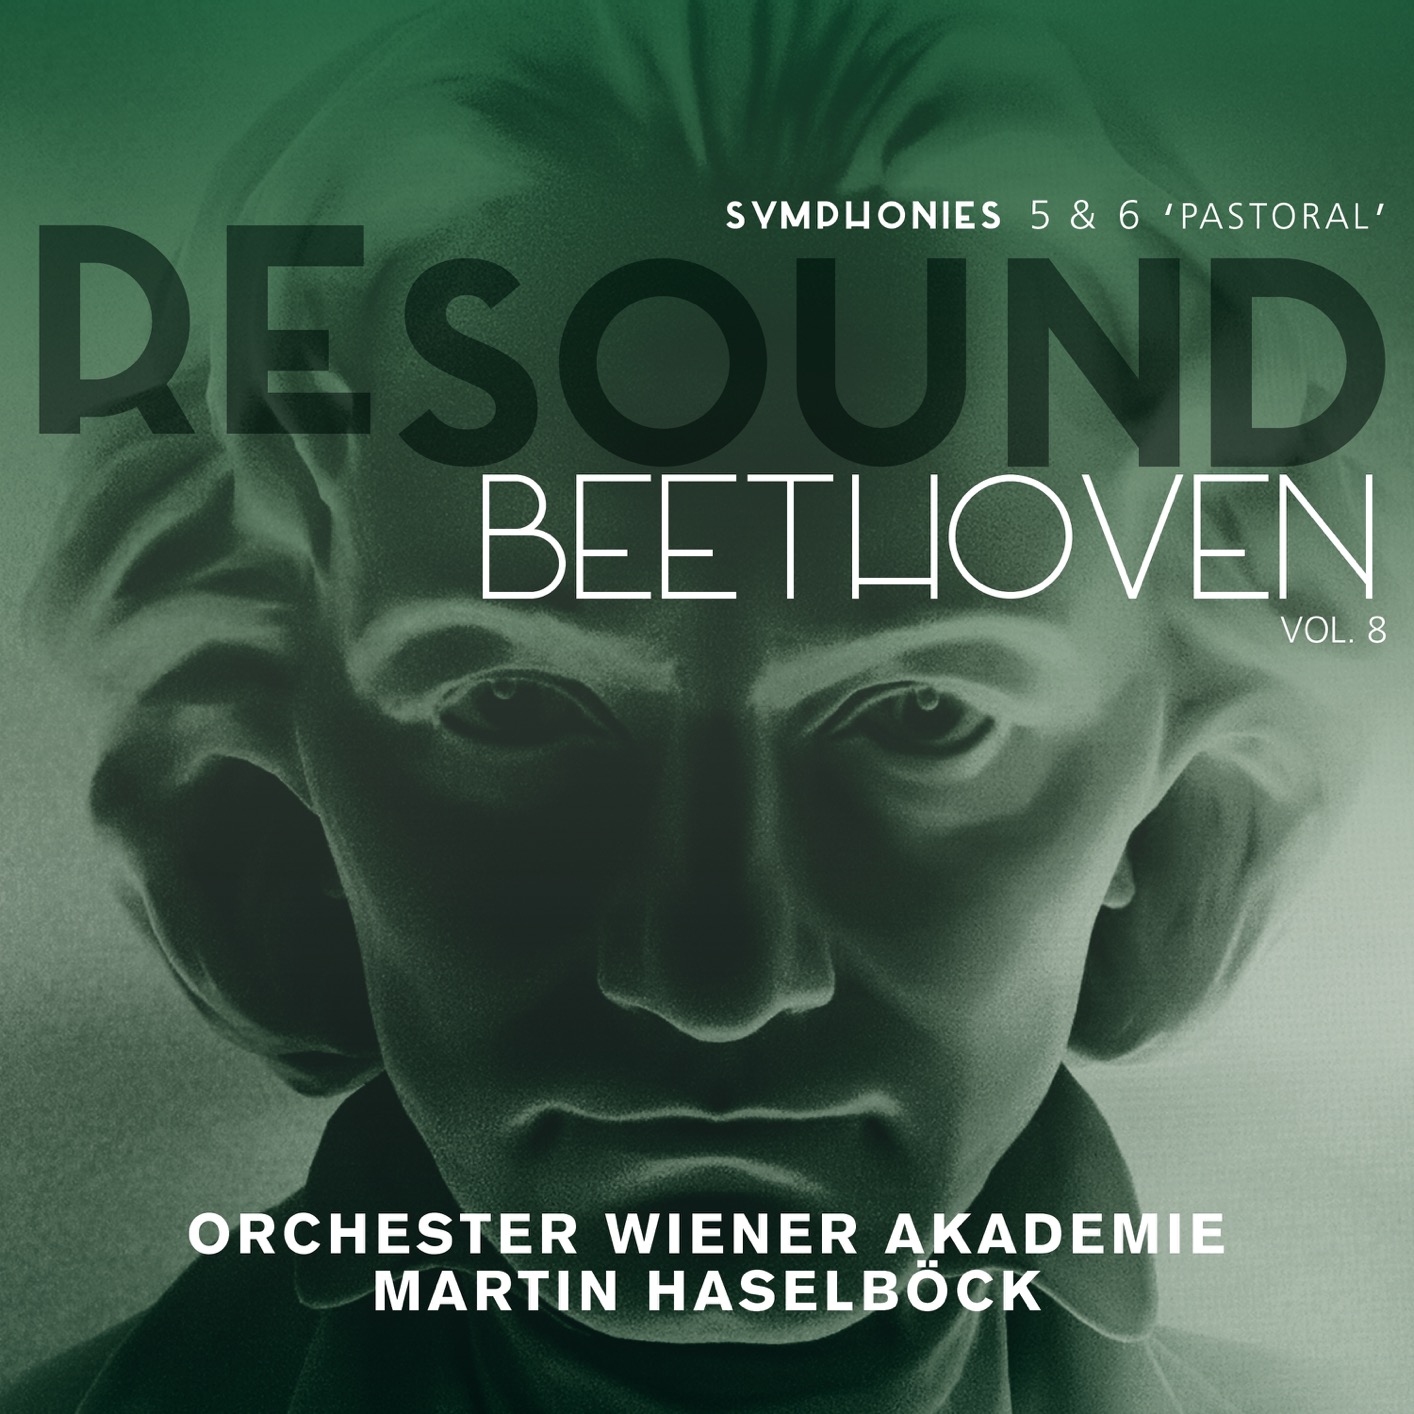 Martin Haselbock – Beethoven: Symphonies 5 & 6 “Pastoral” (Resound Collection, Vol. 8) (2020) [FLAC 24bit/96kHz]